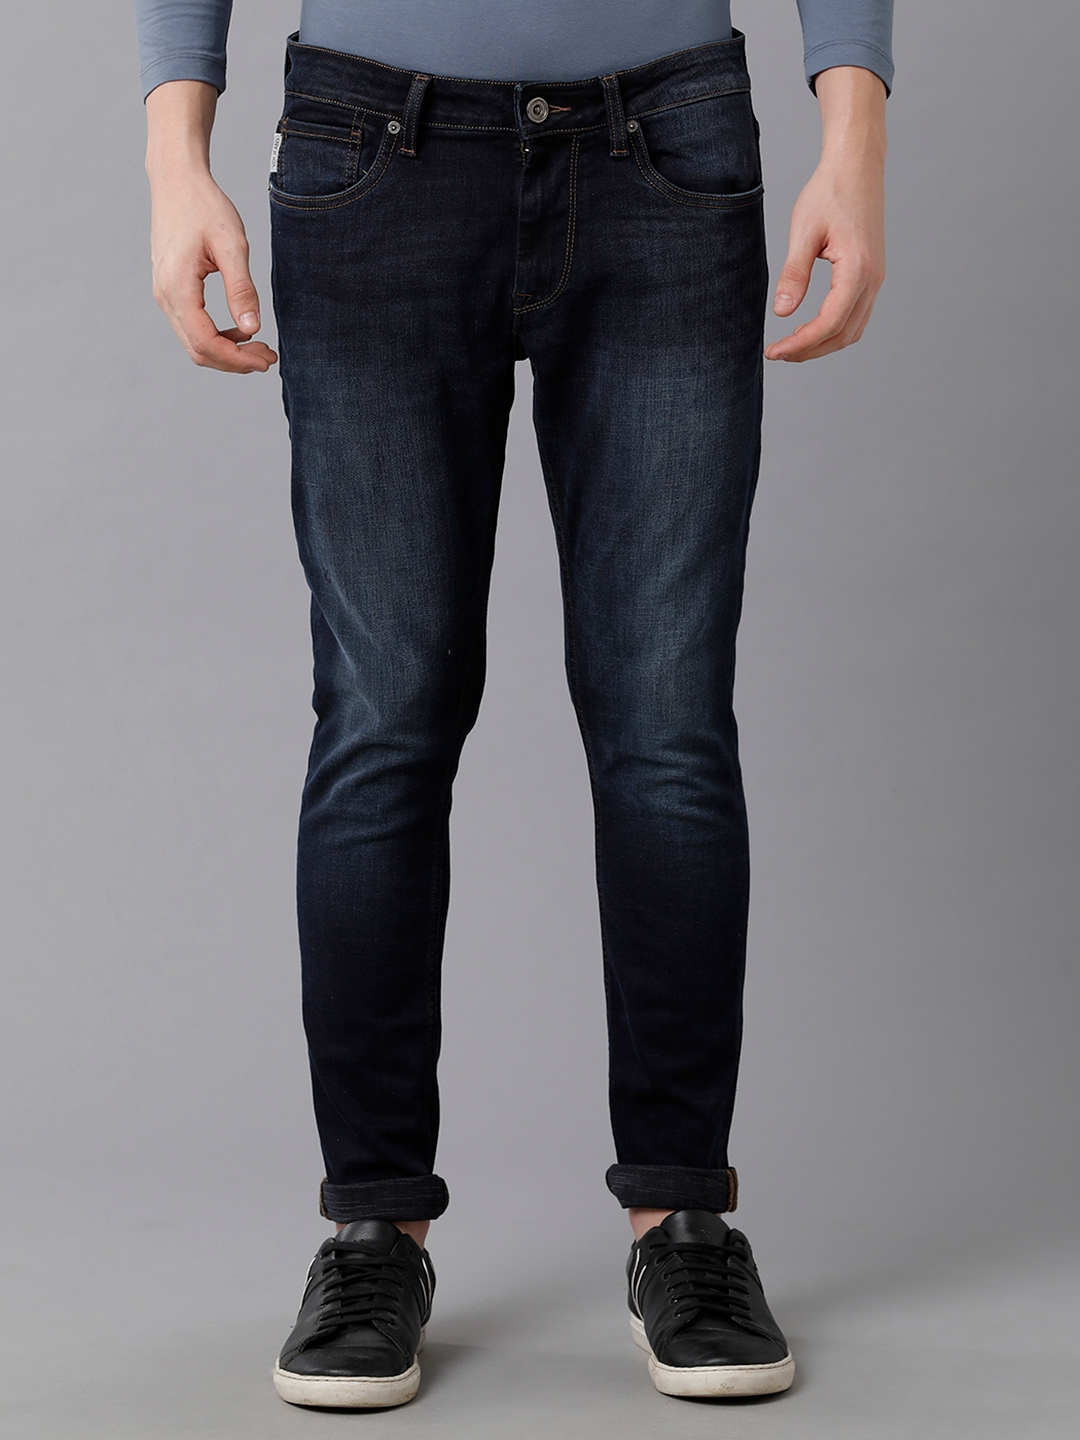 VOI JEANS Men's Solid Indigo Cotton Blend Skinny Fit Flat Front Jeans